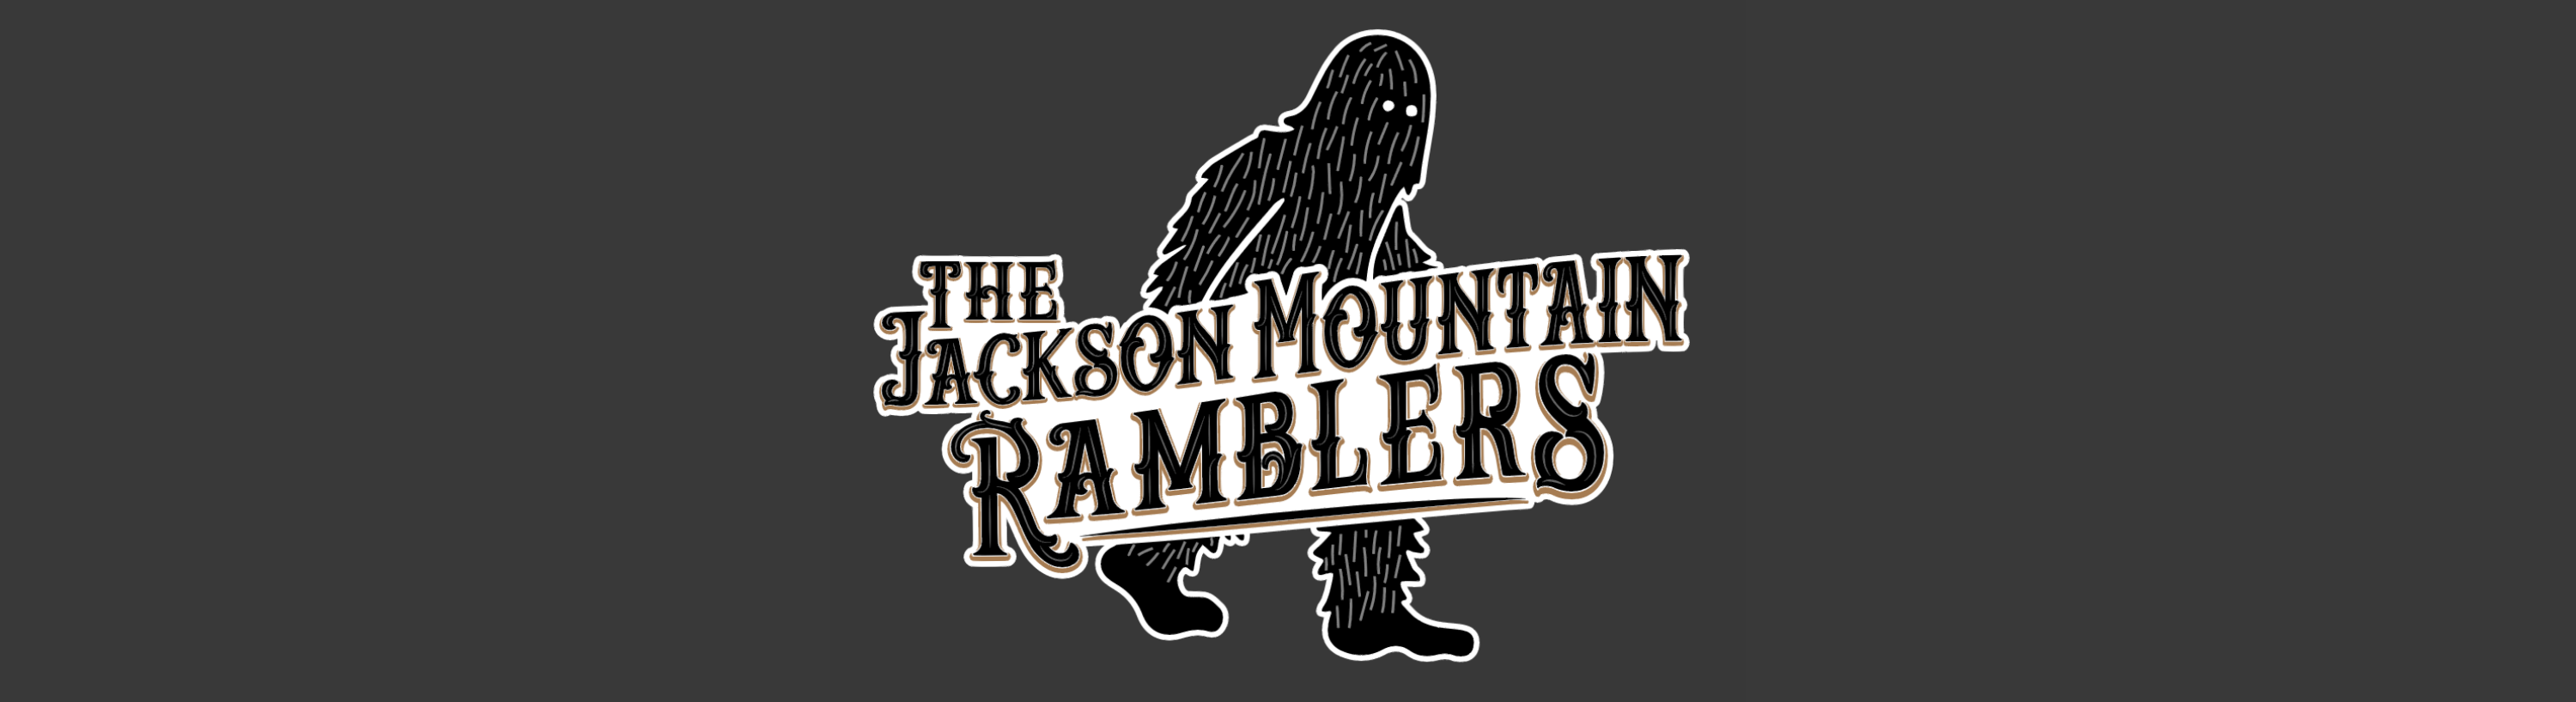 Jackson Mountain Ramblers